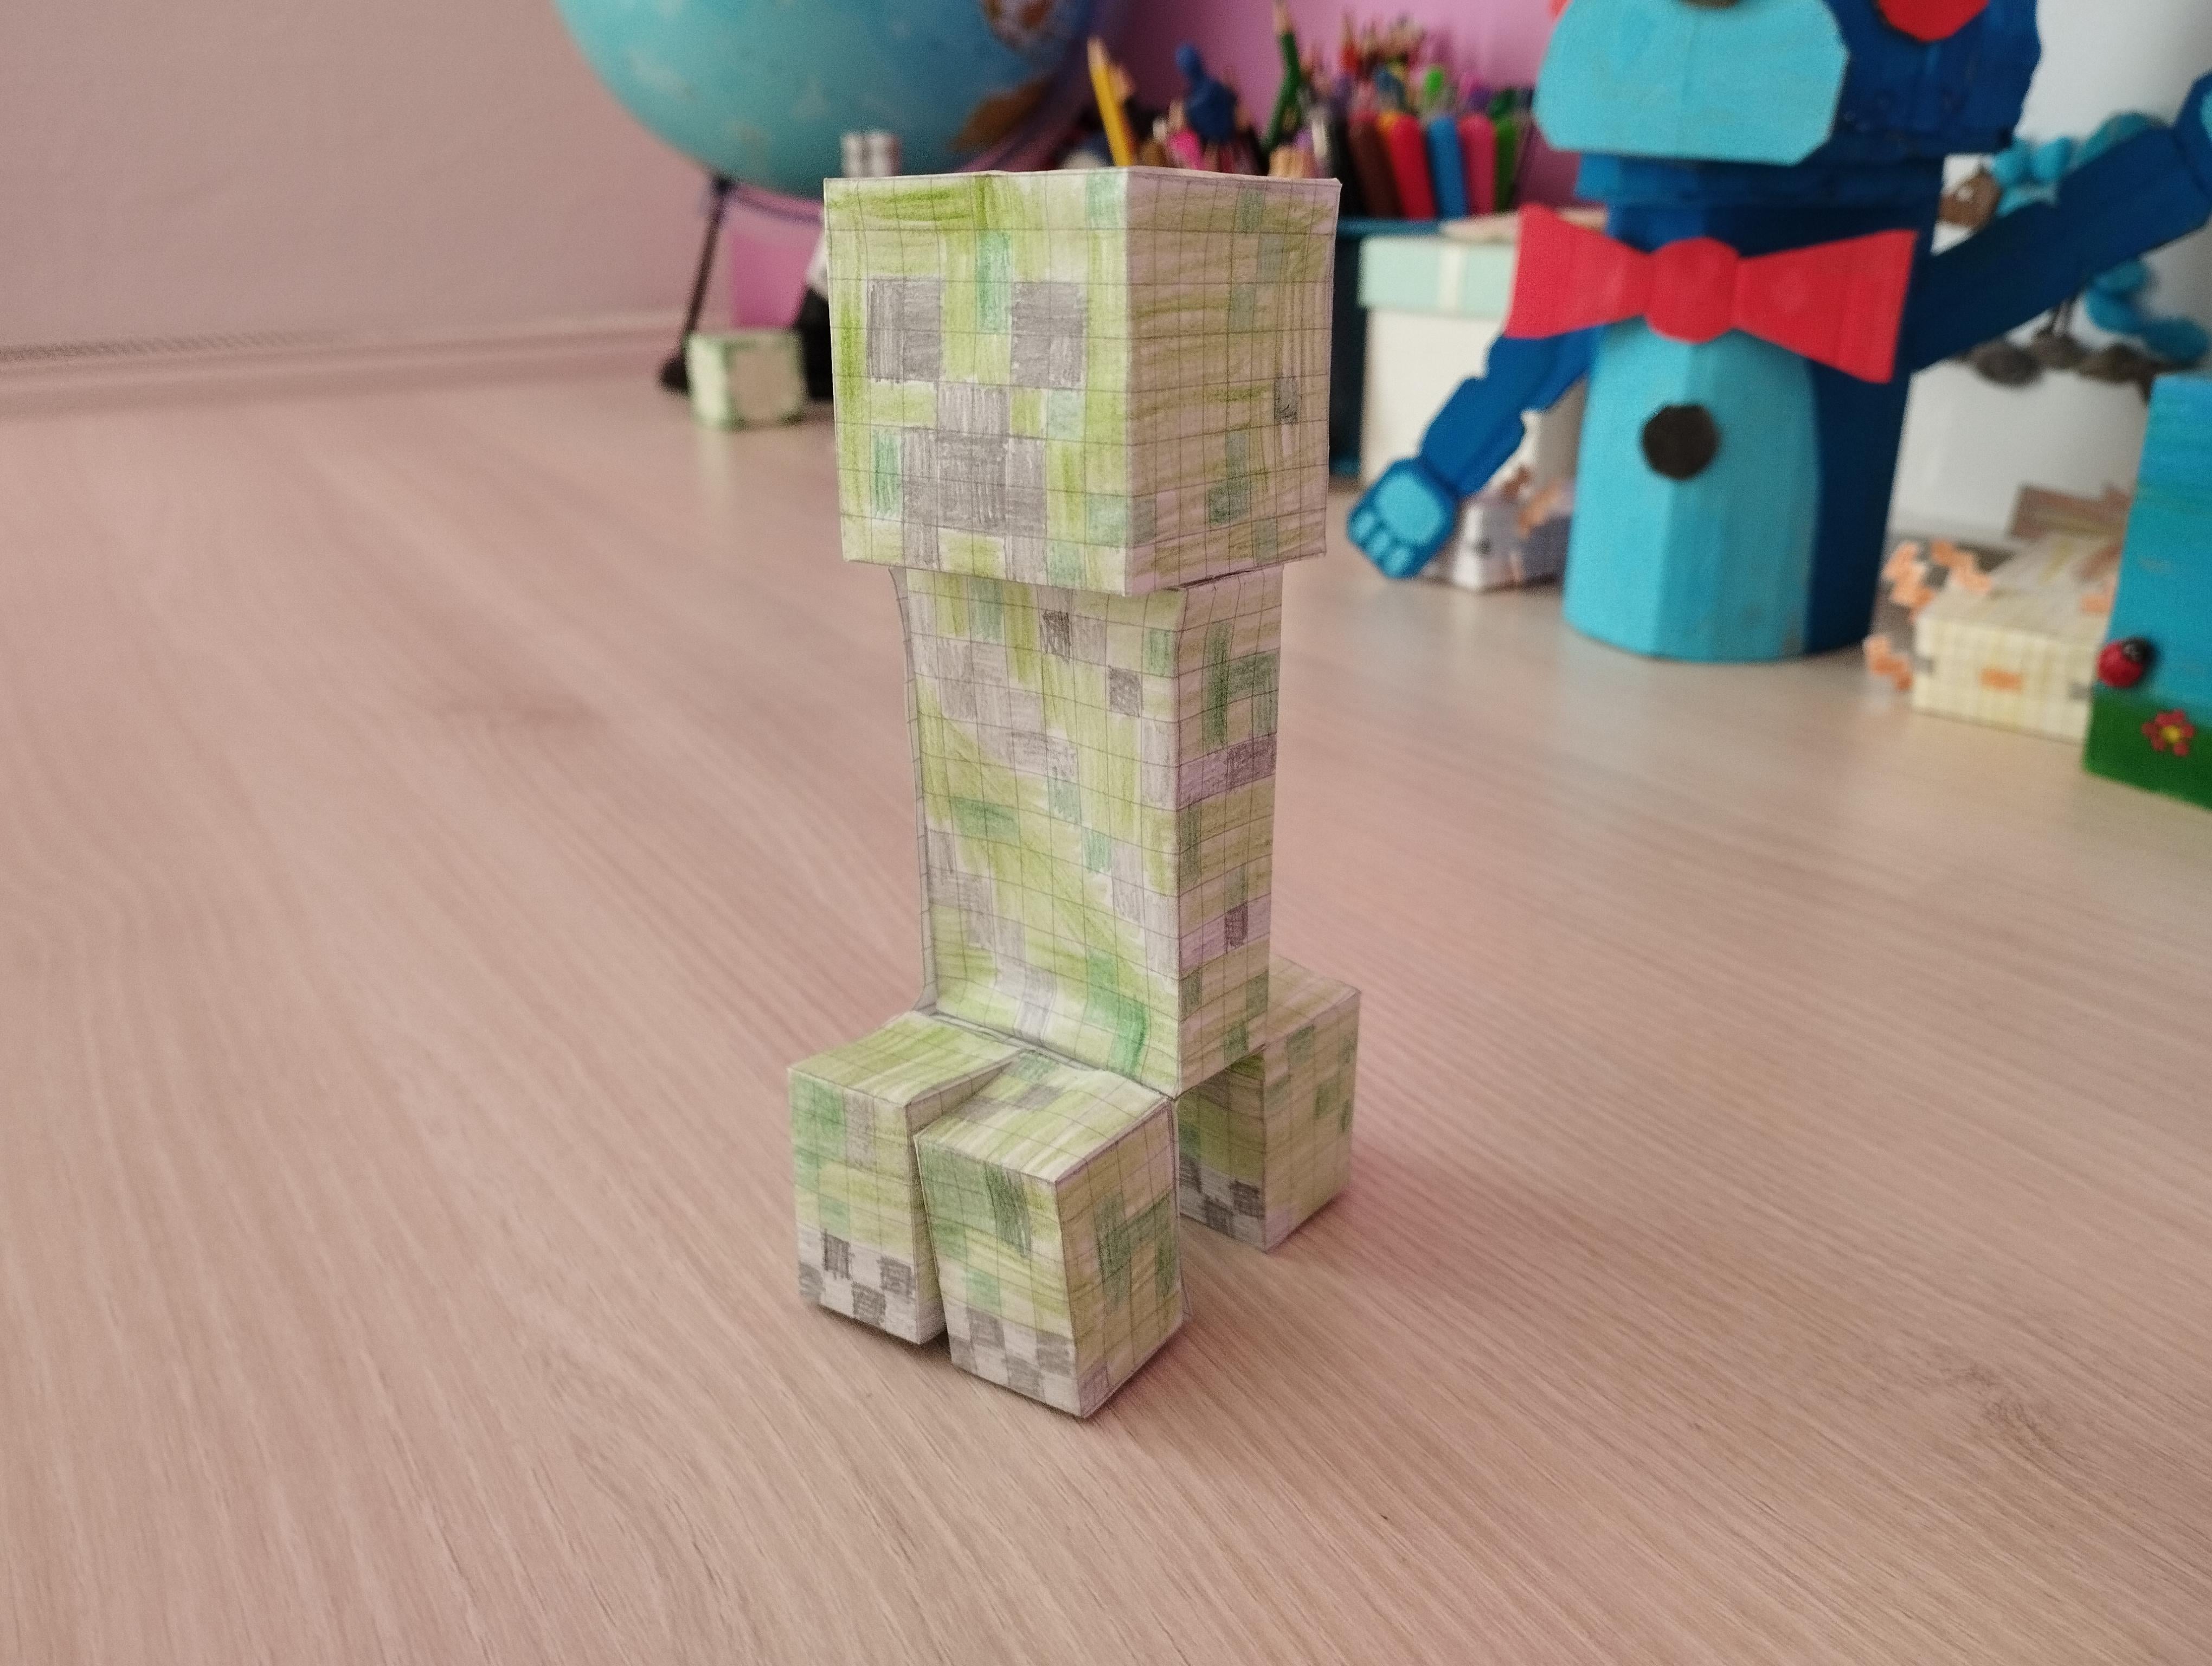 I was bored at school so i made creeper papercraft rminecraft